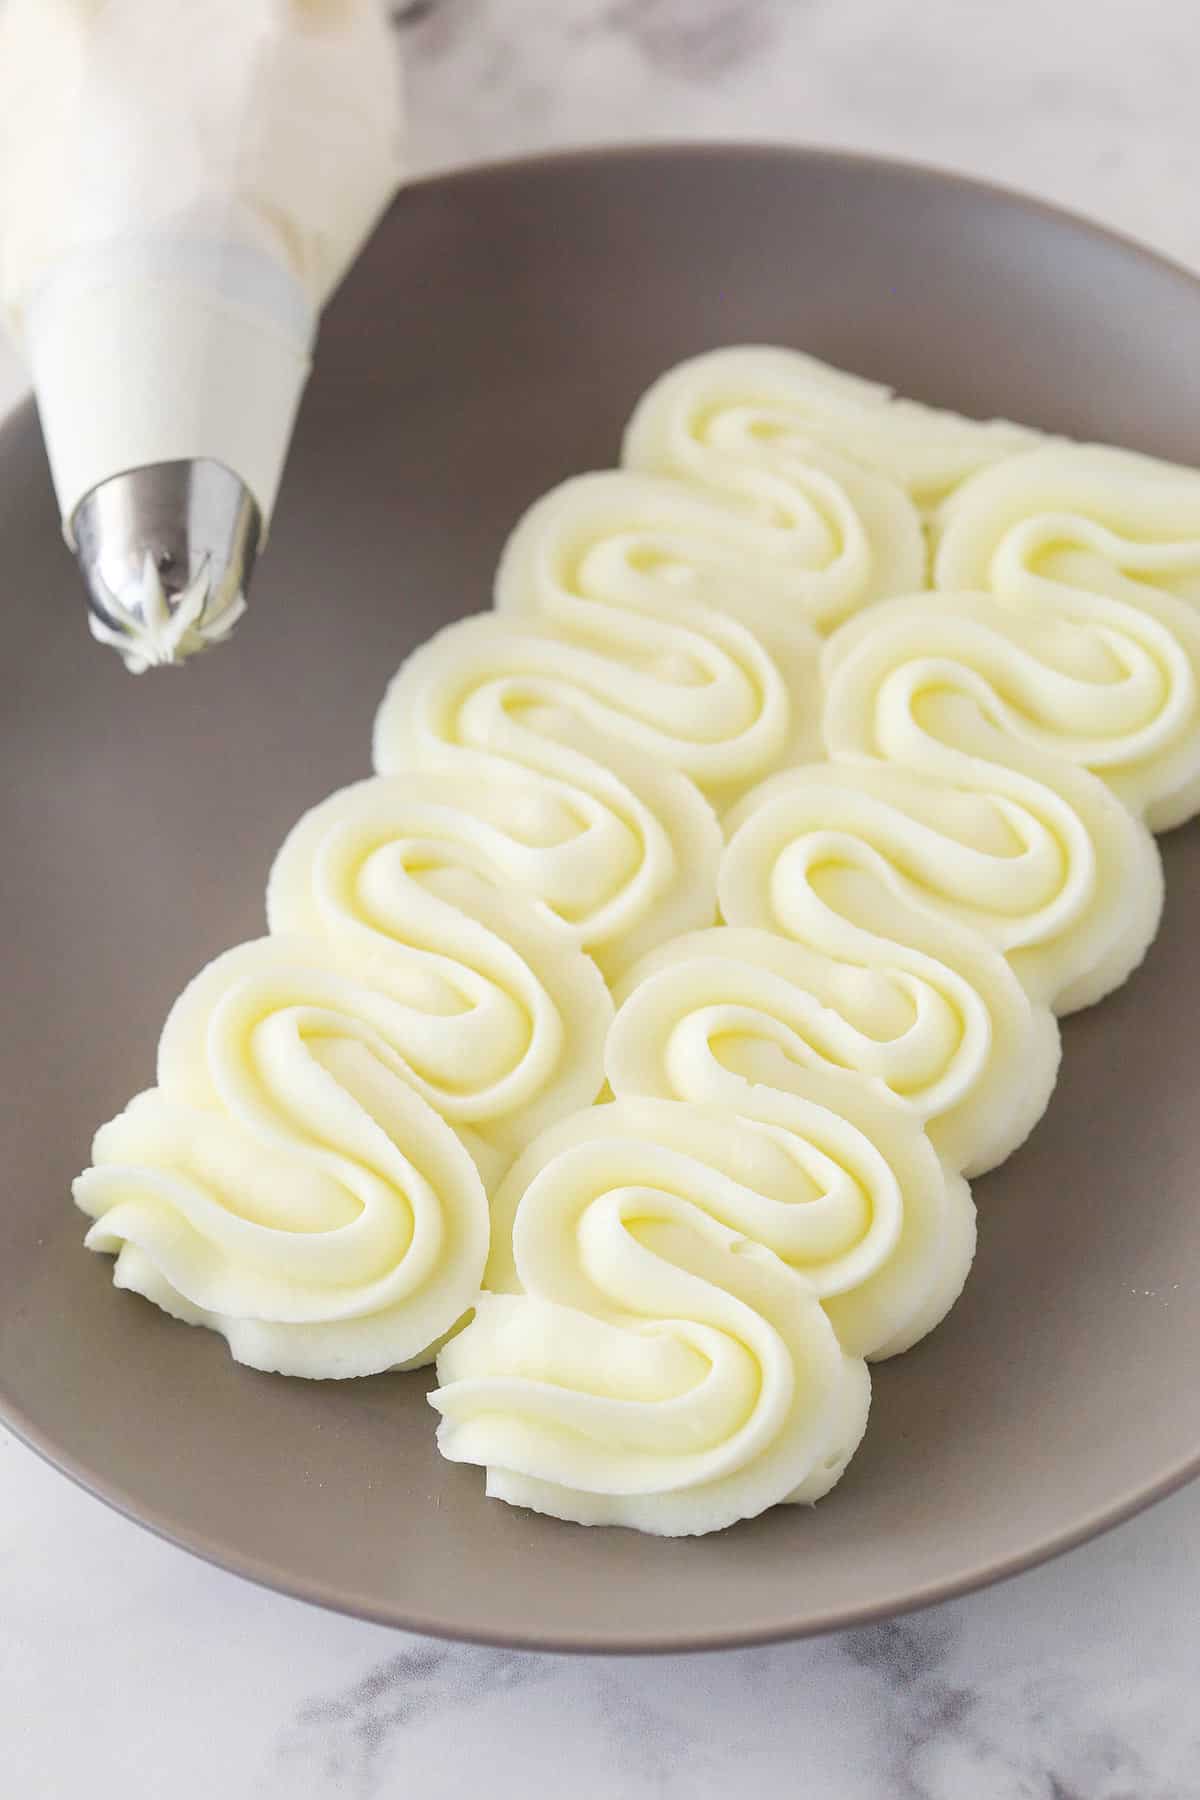 Vanilla Cake With Vanilla Cream Cheese Frosting Recipe | Bon Appétit